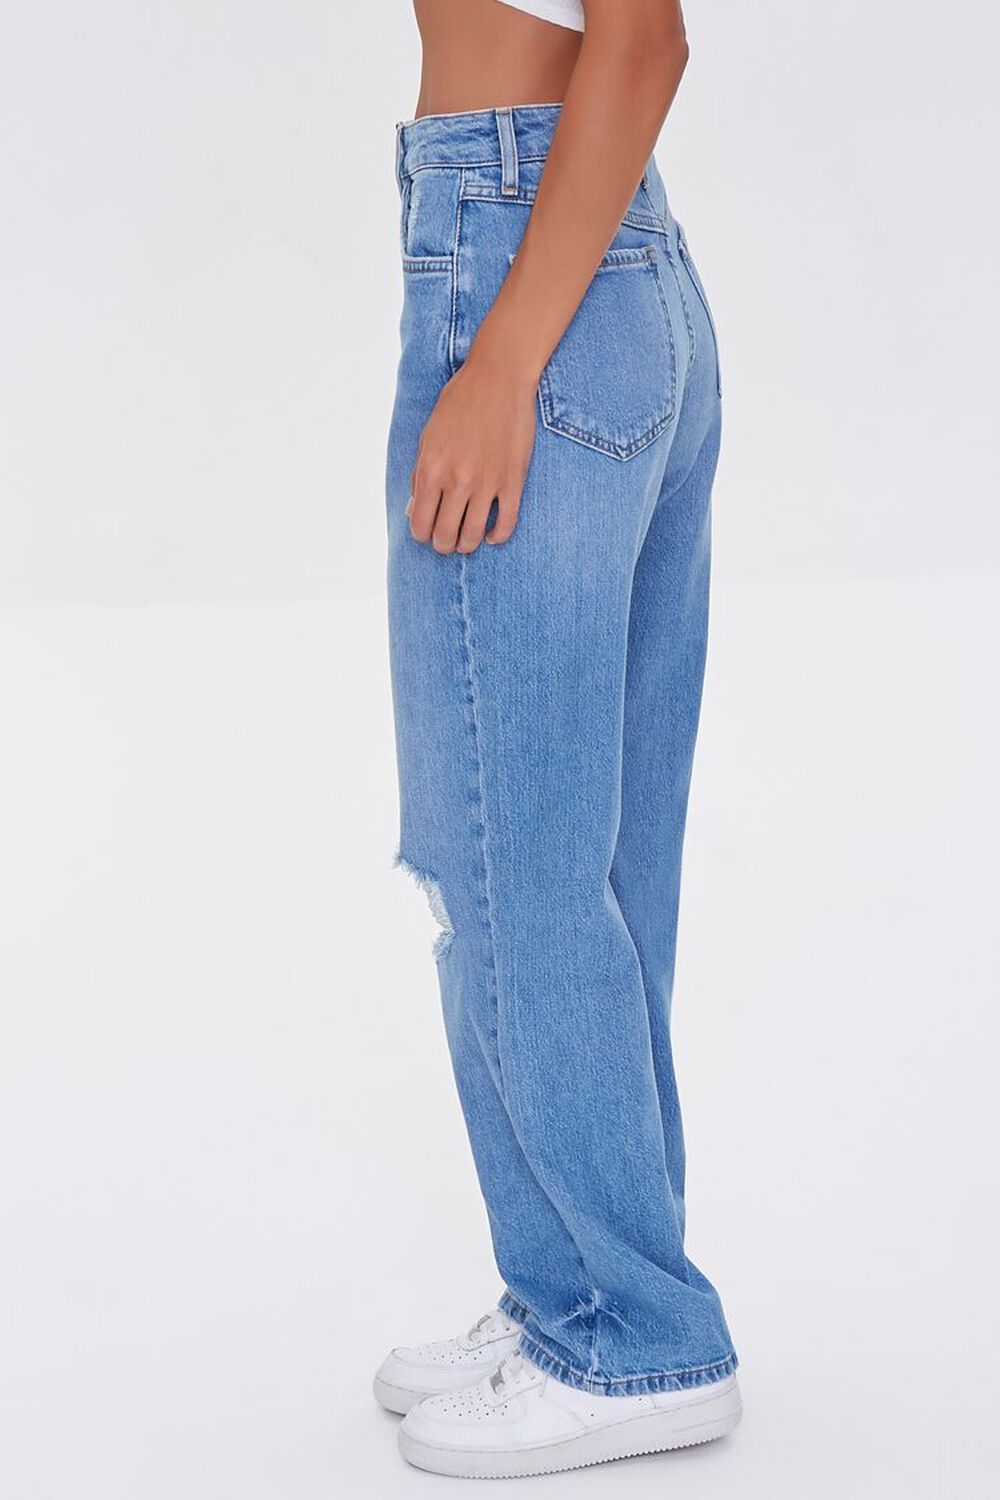 LIGHT DENIM Premium High-Waist 90s Fit Jeans, image 3